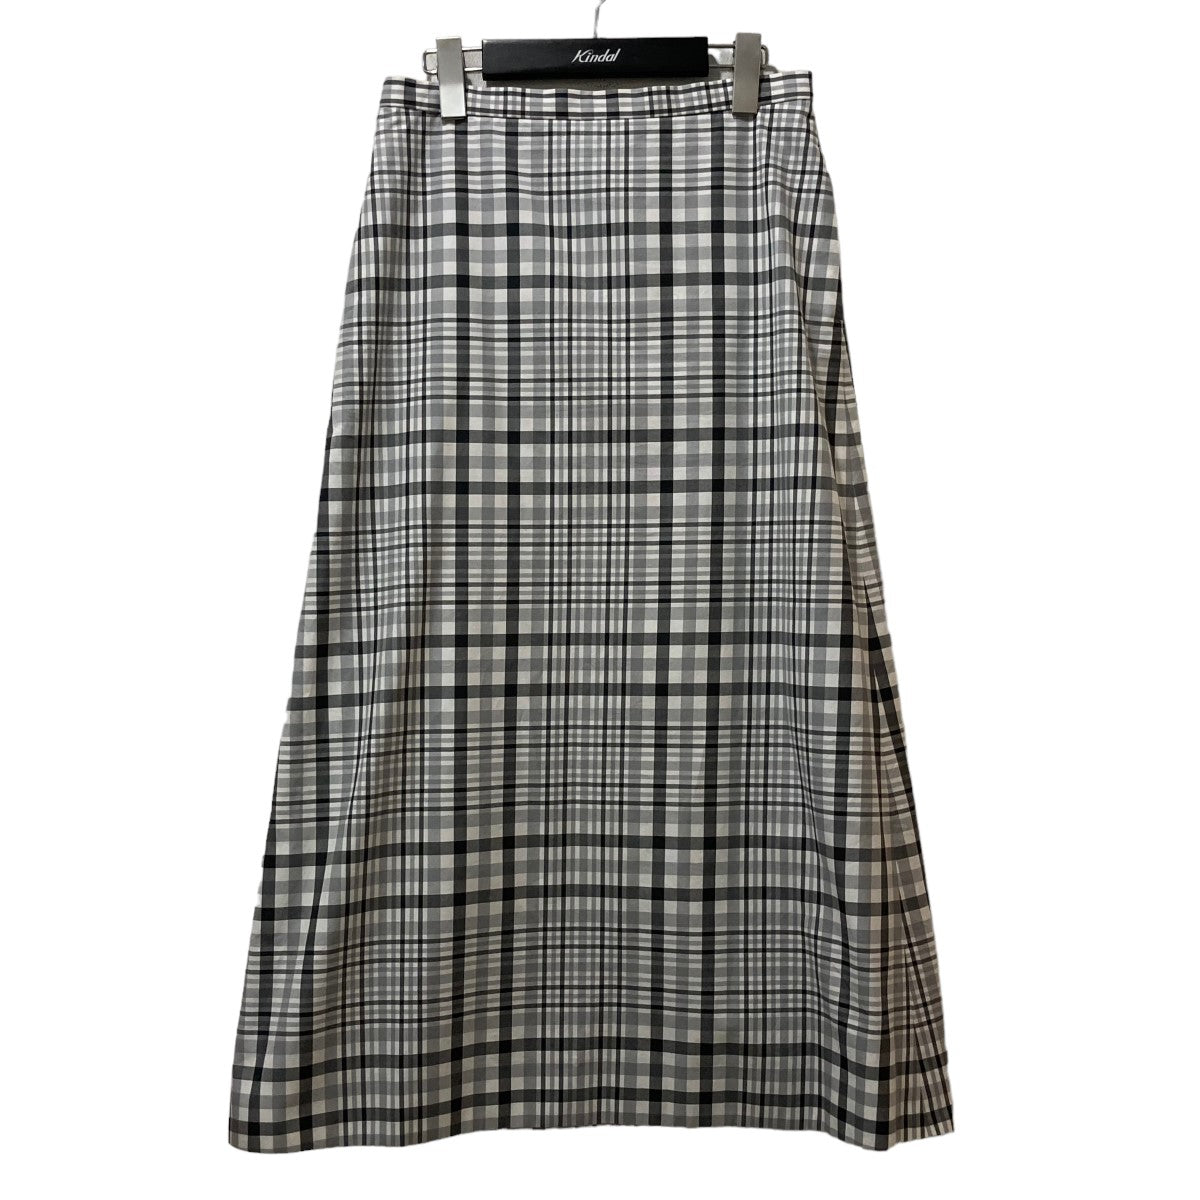 DRAWER(ドゥロワー) A-line skirt チェックAラインスカート 6524-299 ...